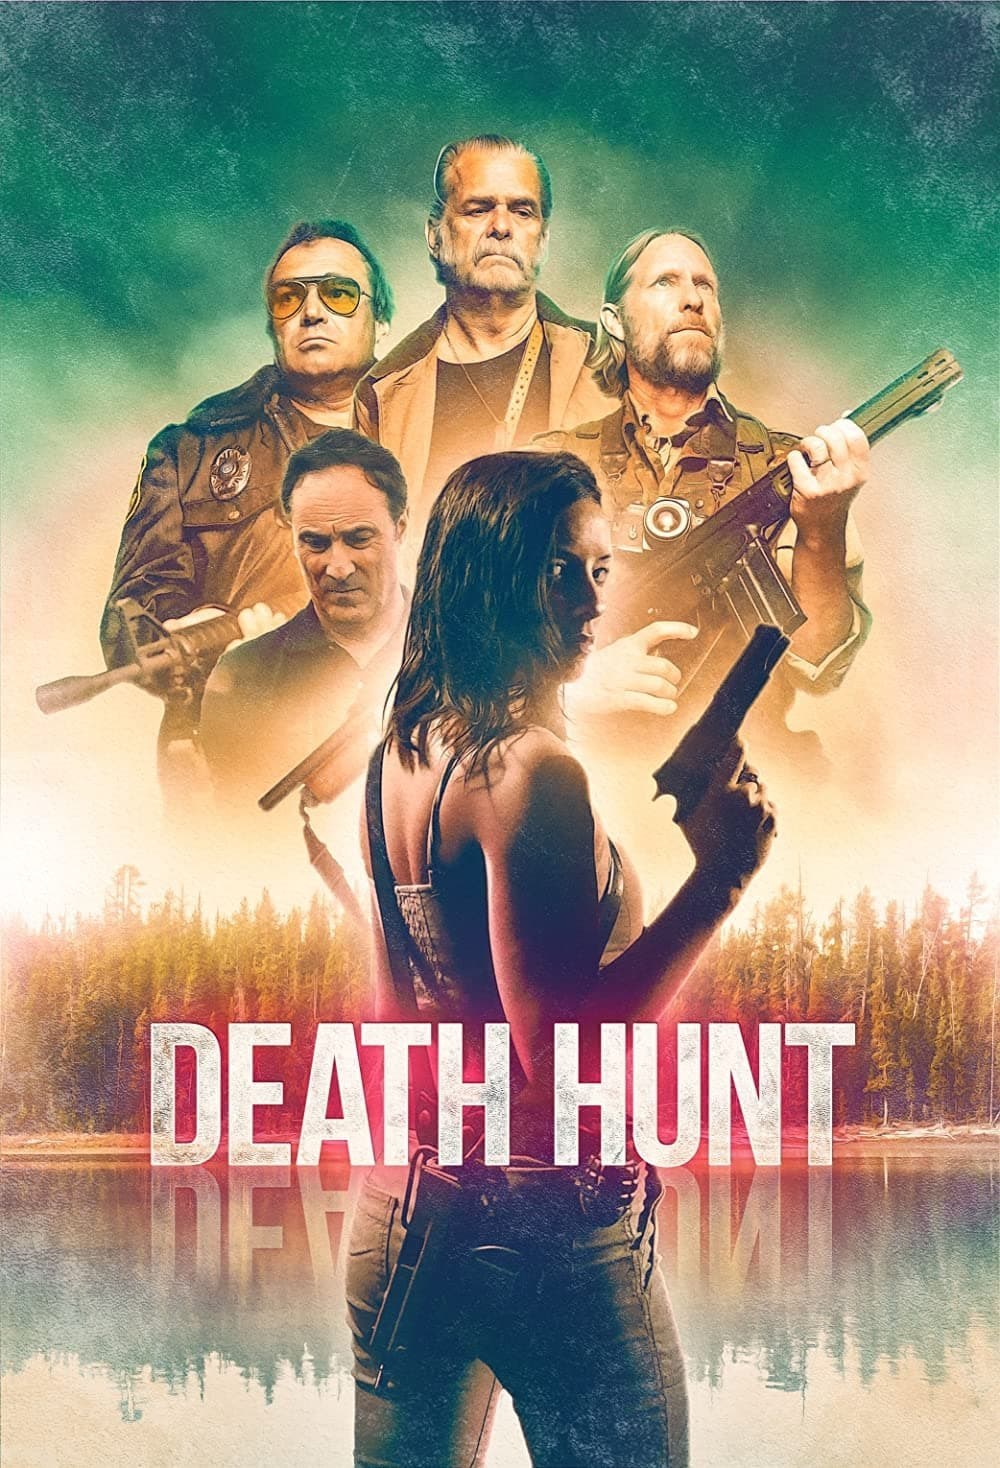 Death hunt - 2022